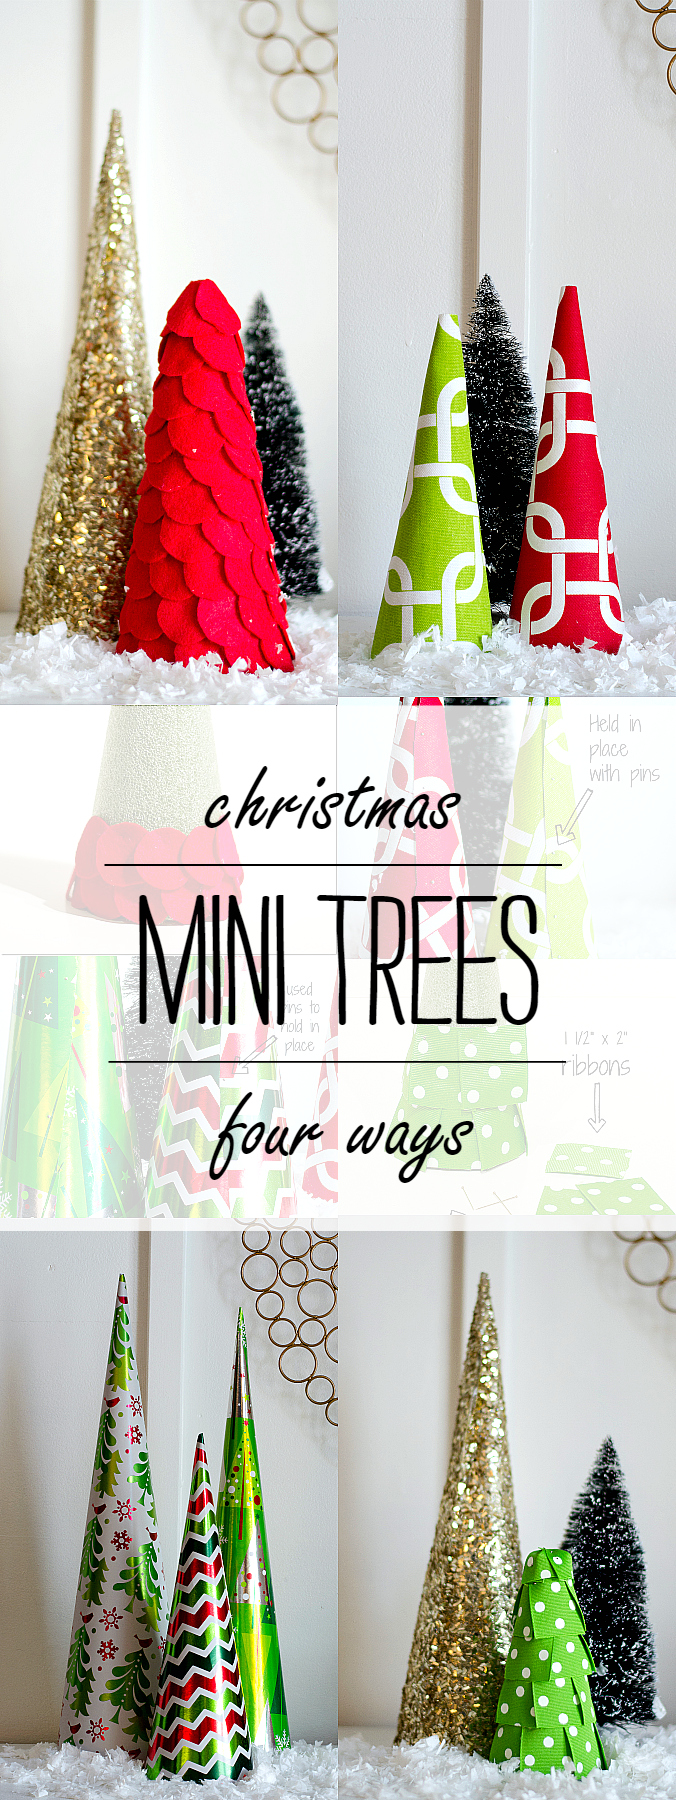 Christmas Crafts - Mini Trees